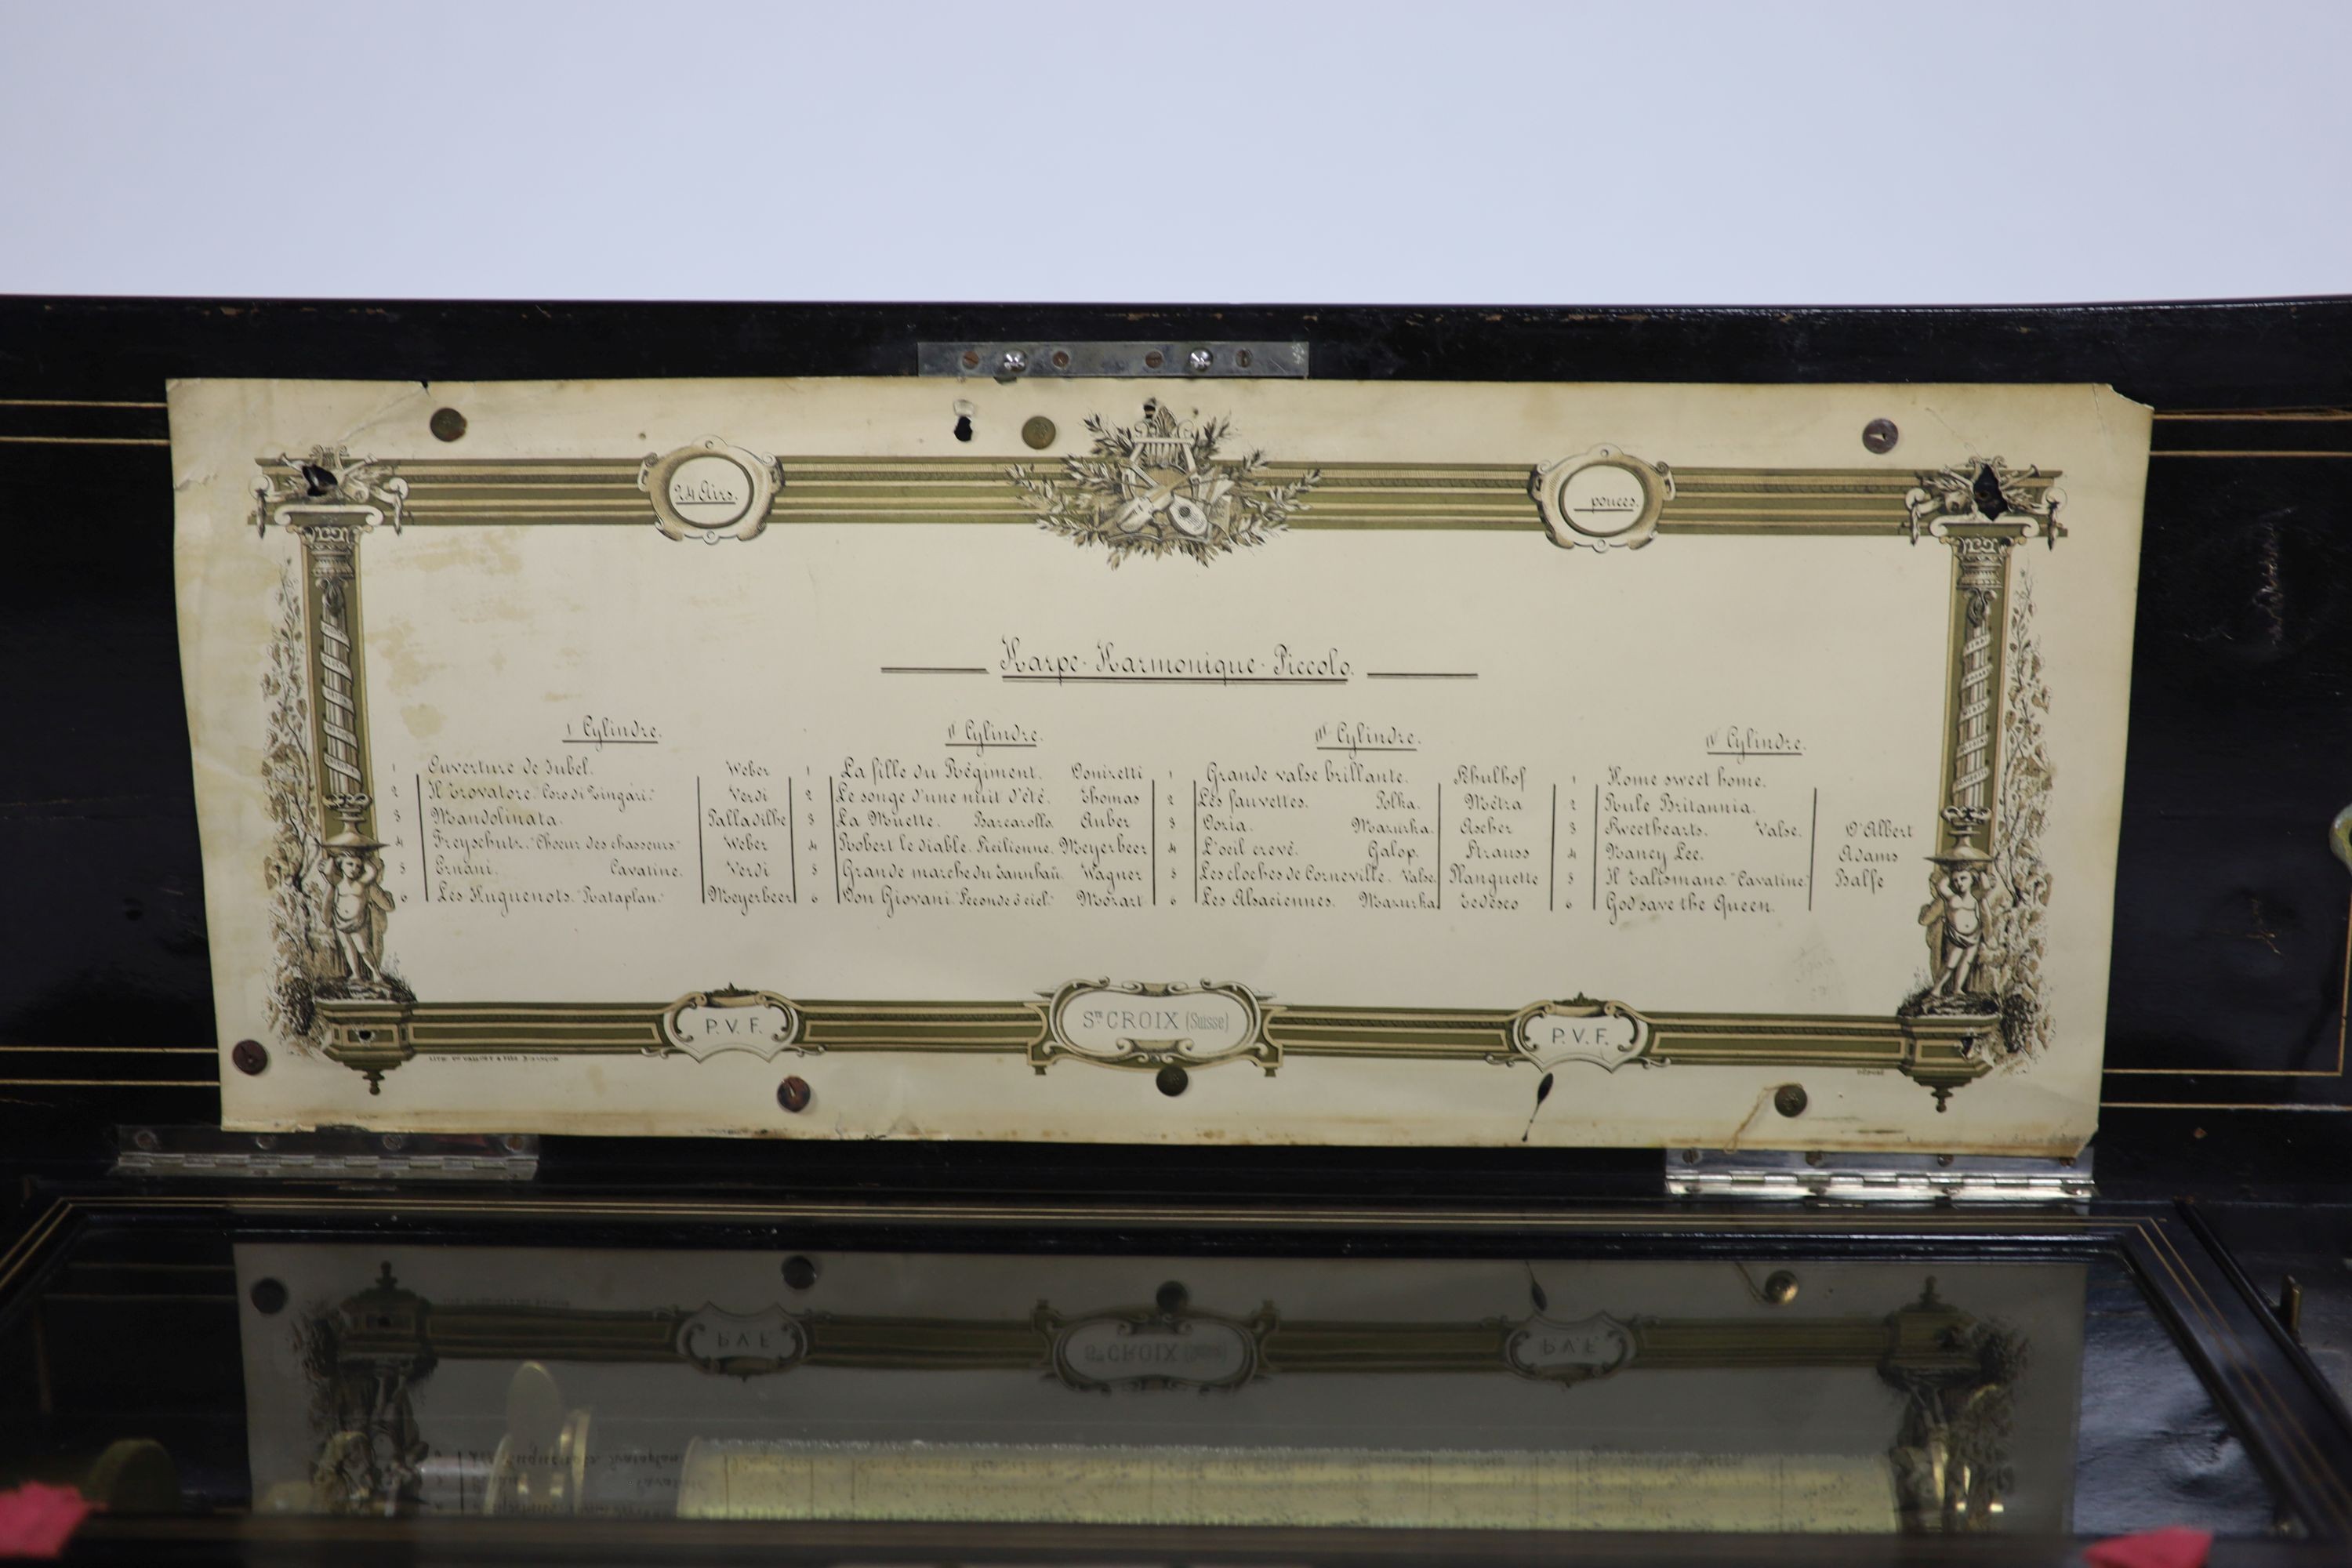 A late 19th century Swiss harpe harmonique piccolo cylinder music box H 21cm. W 84cm. D 31cm.